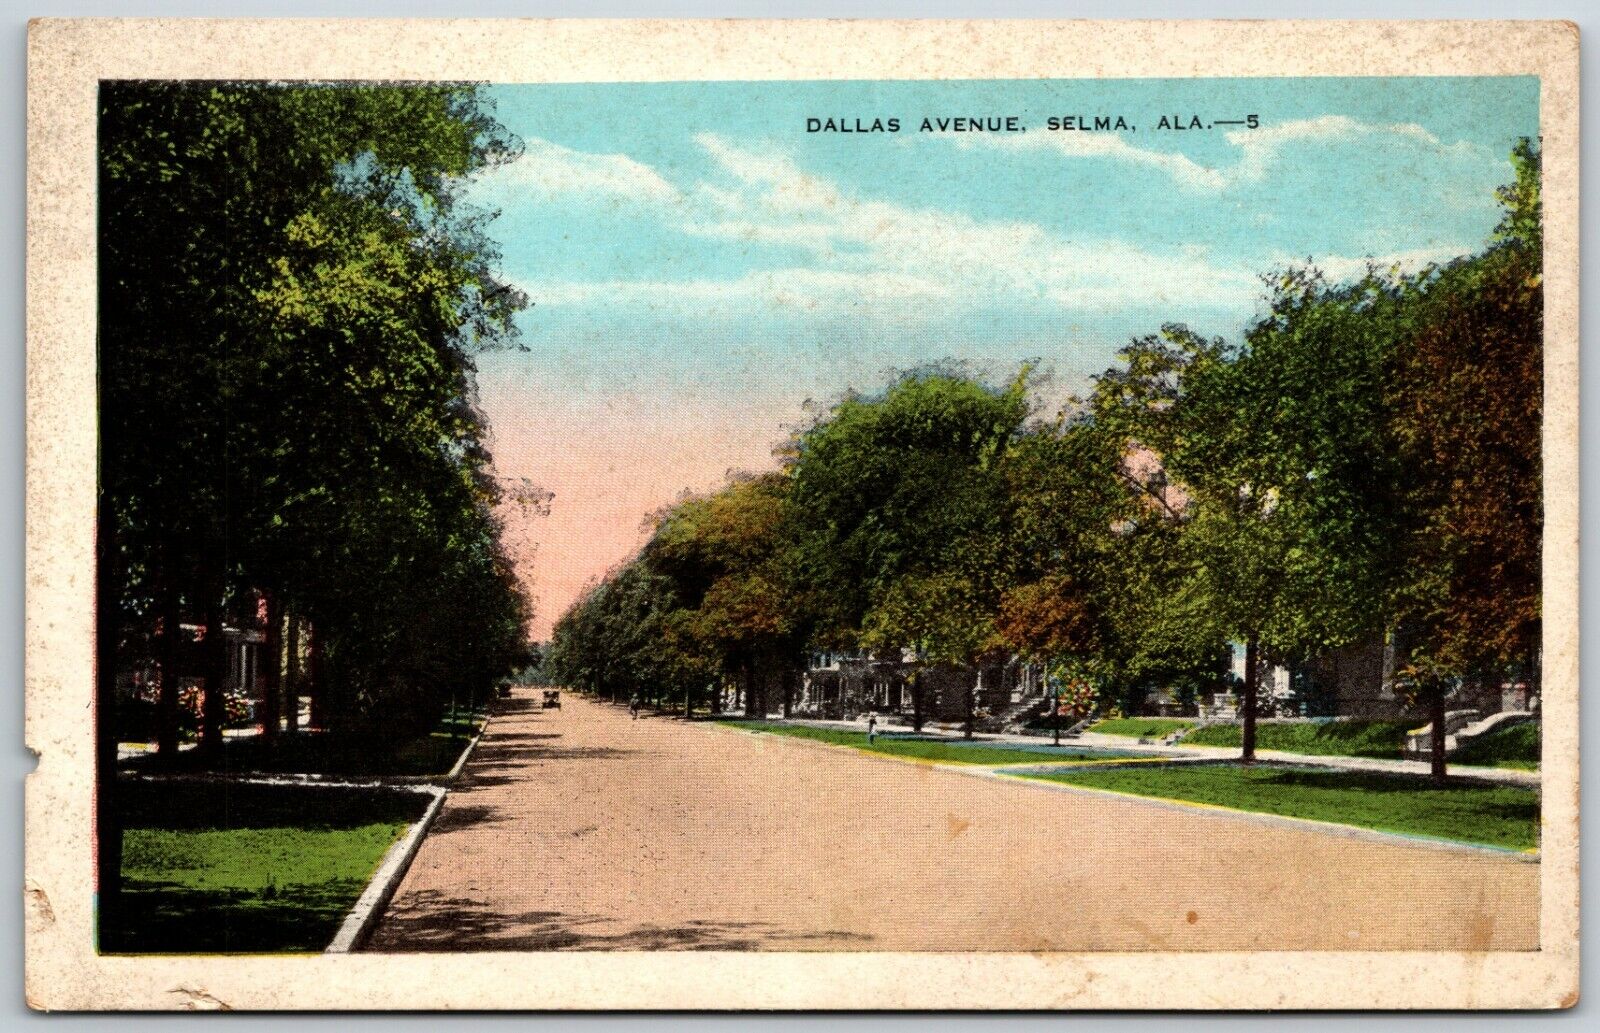 Dallas Avenue, Selma, Alabama - Postcard